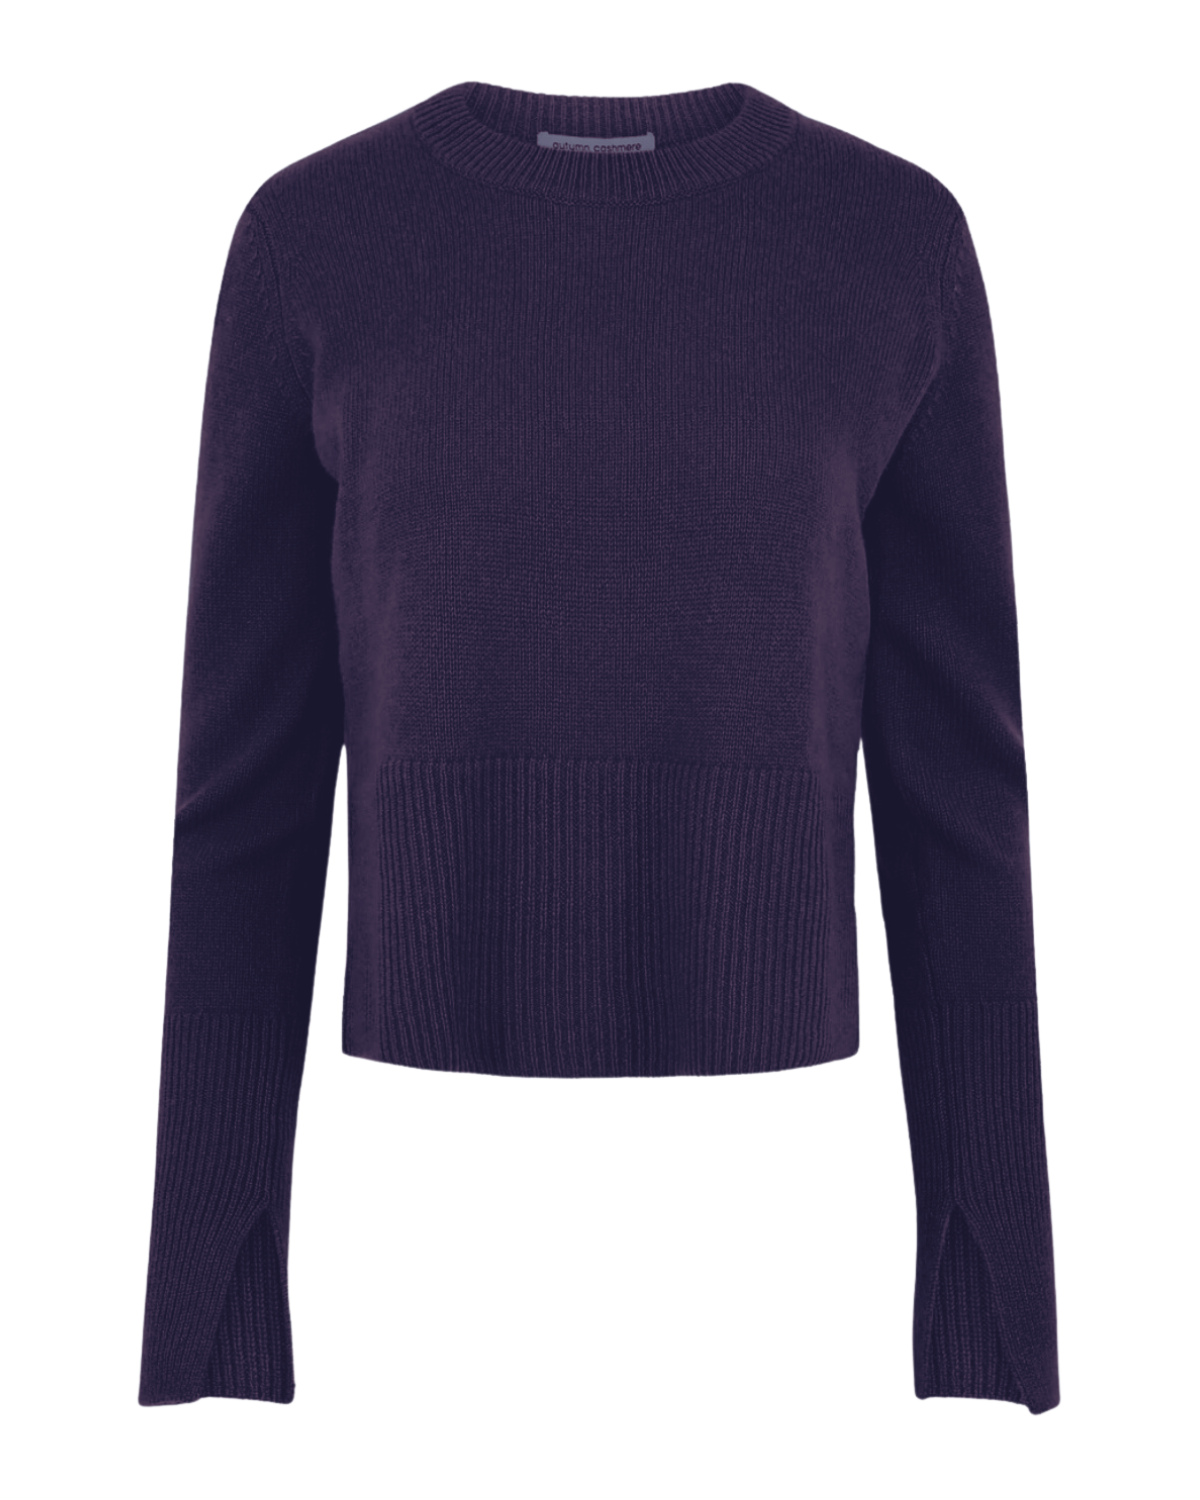 Boxy Crewneck Sweater w/ Slits (Black Currant)